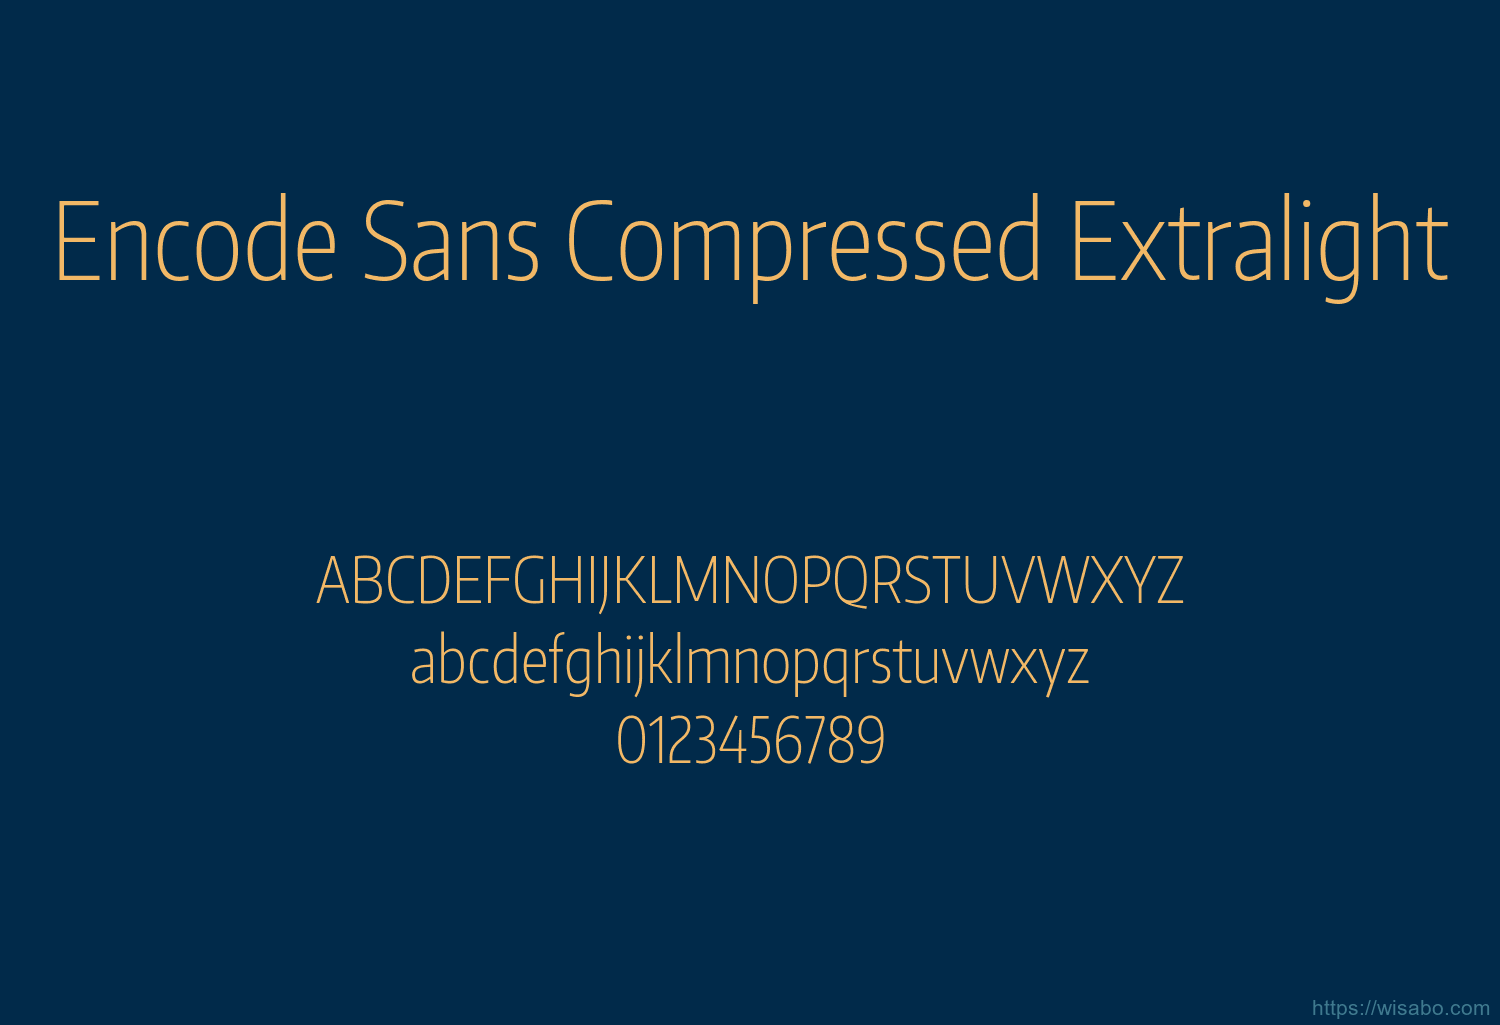 Encode Sans Compressed Extralight